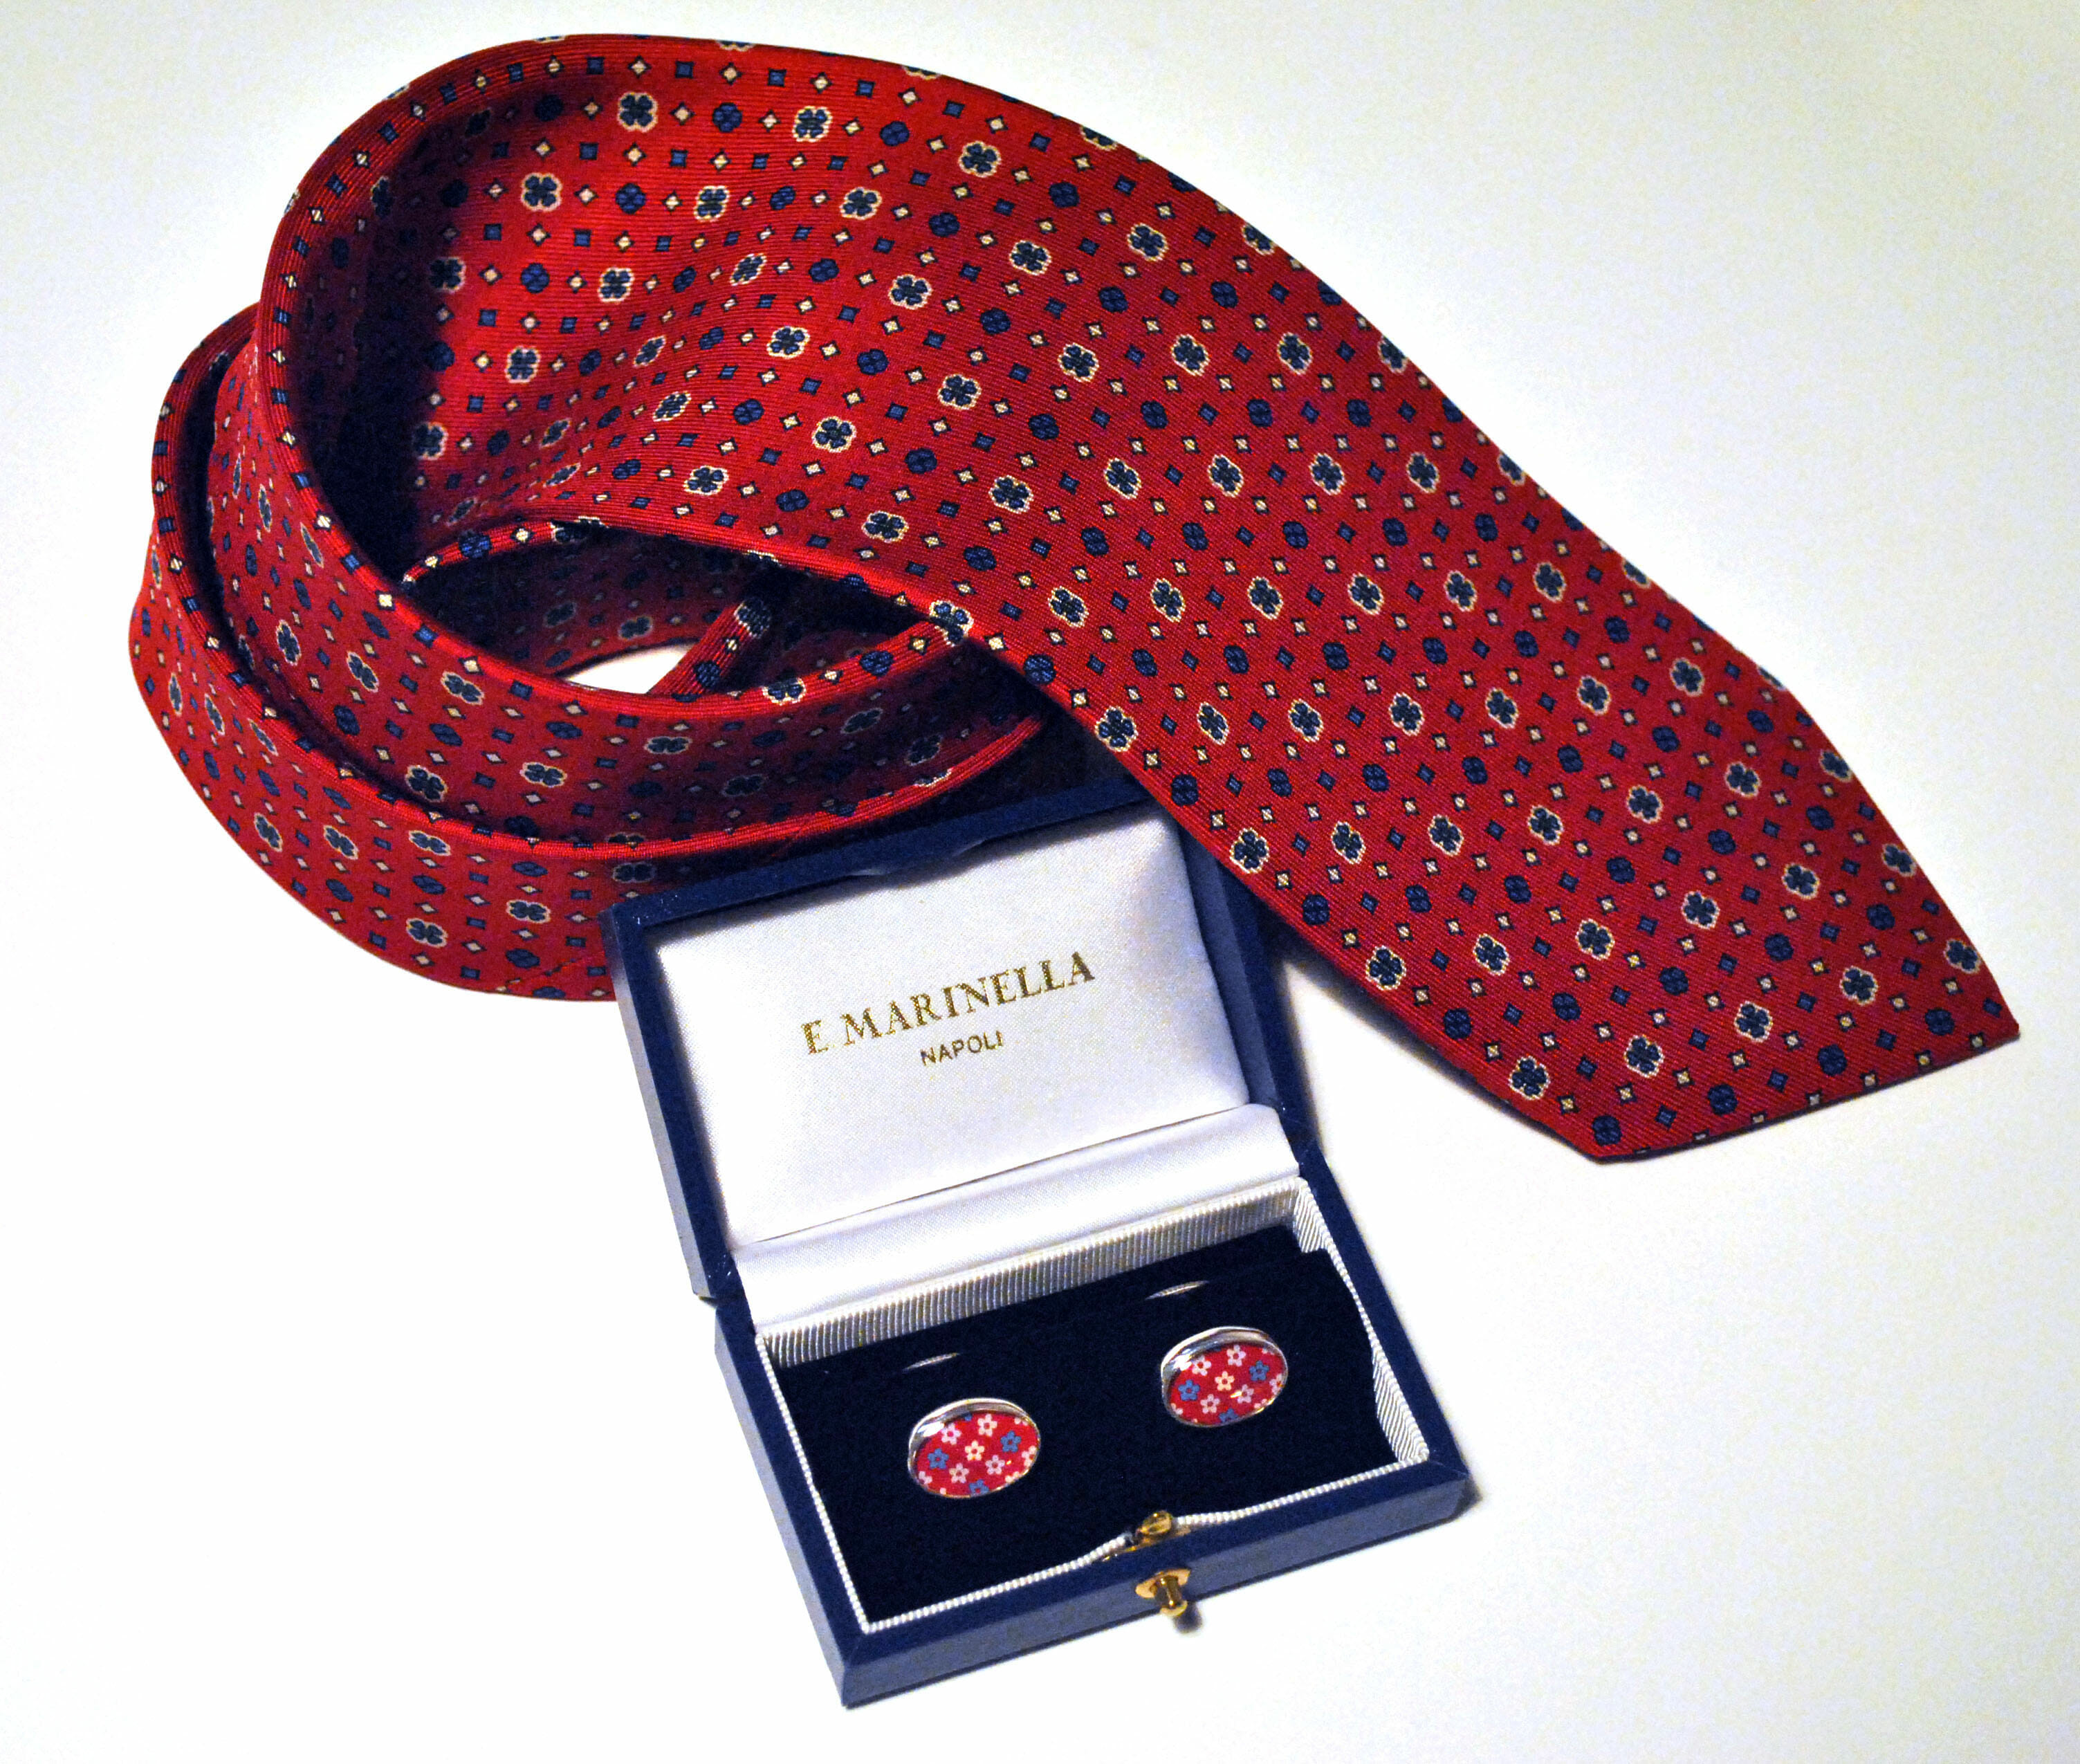 A necktie and corresponding cufflinks from E. Marinella in Naples.